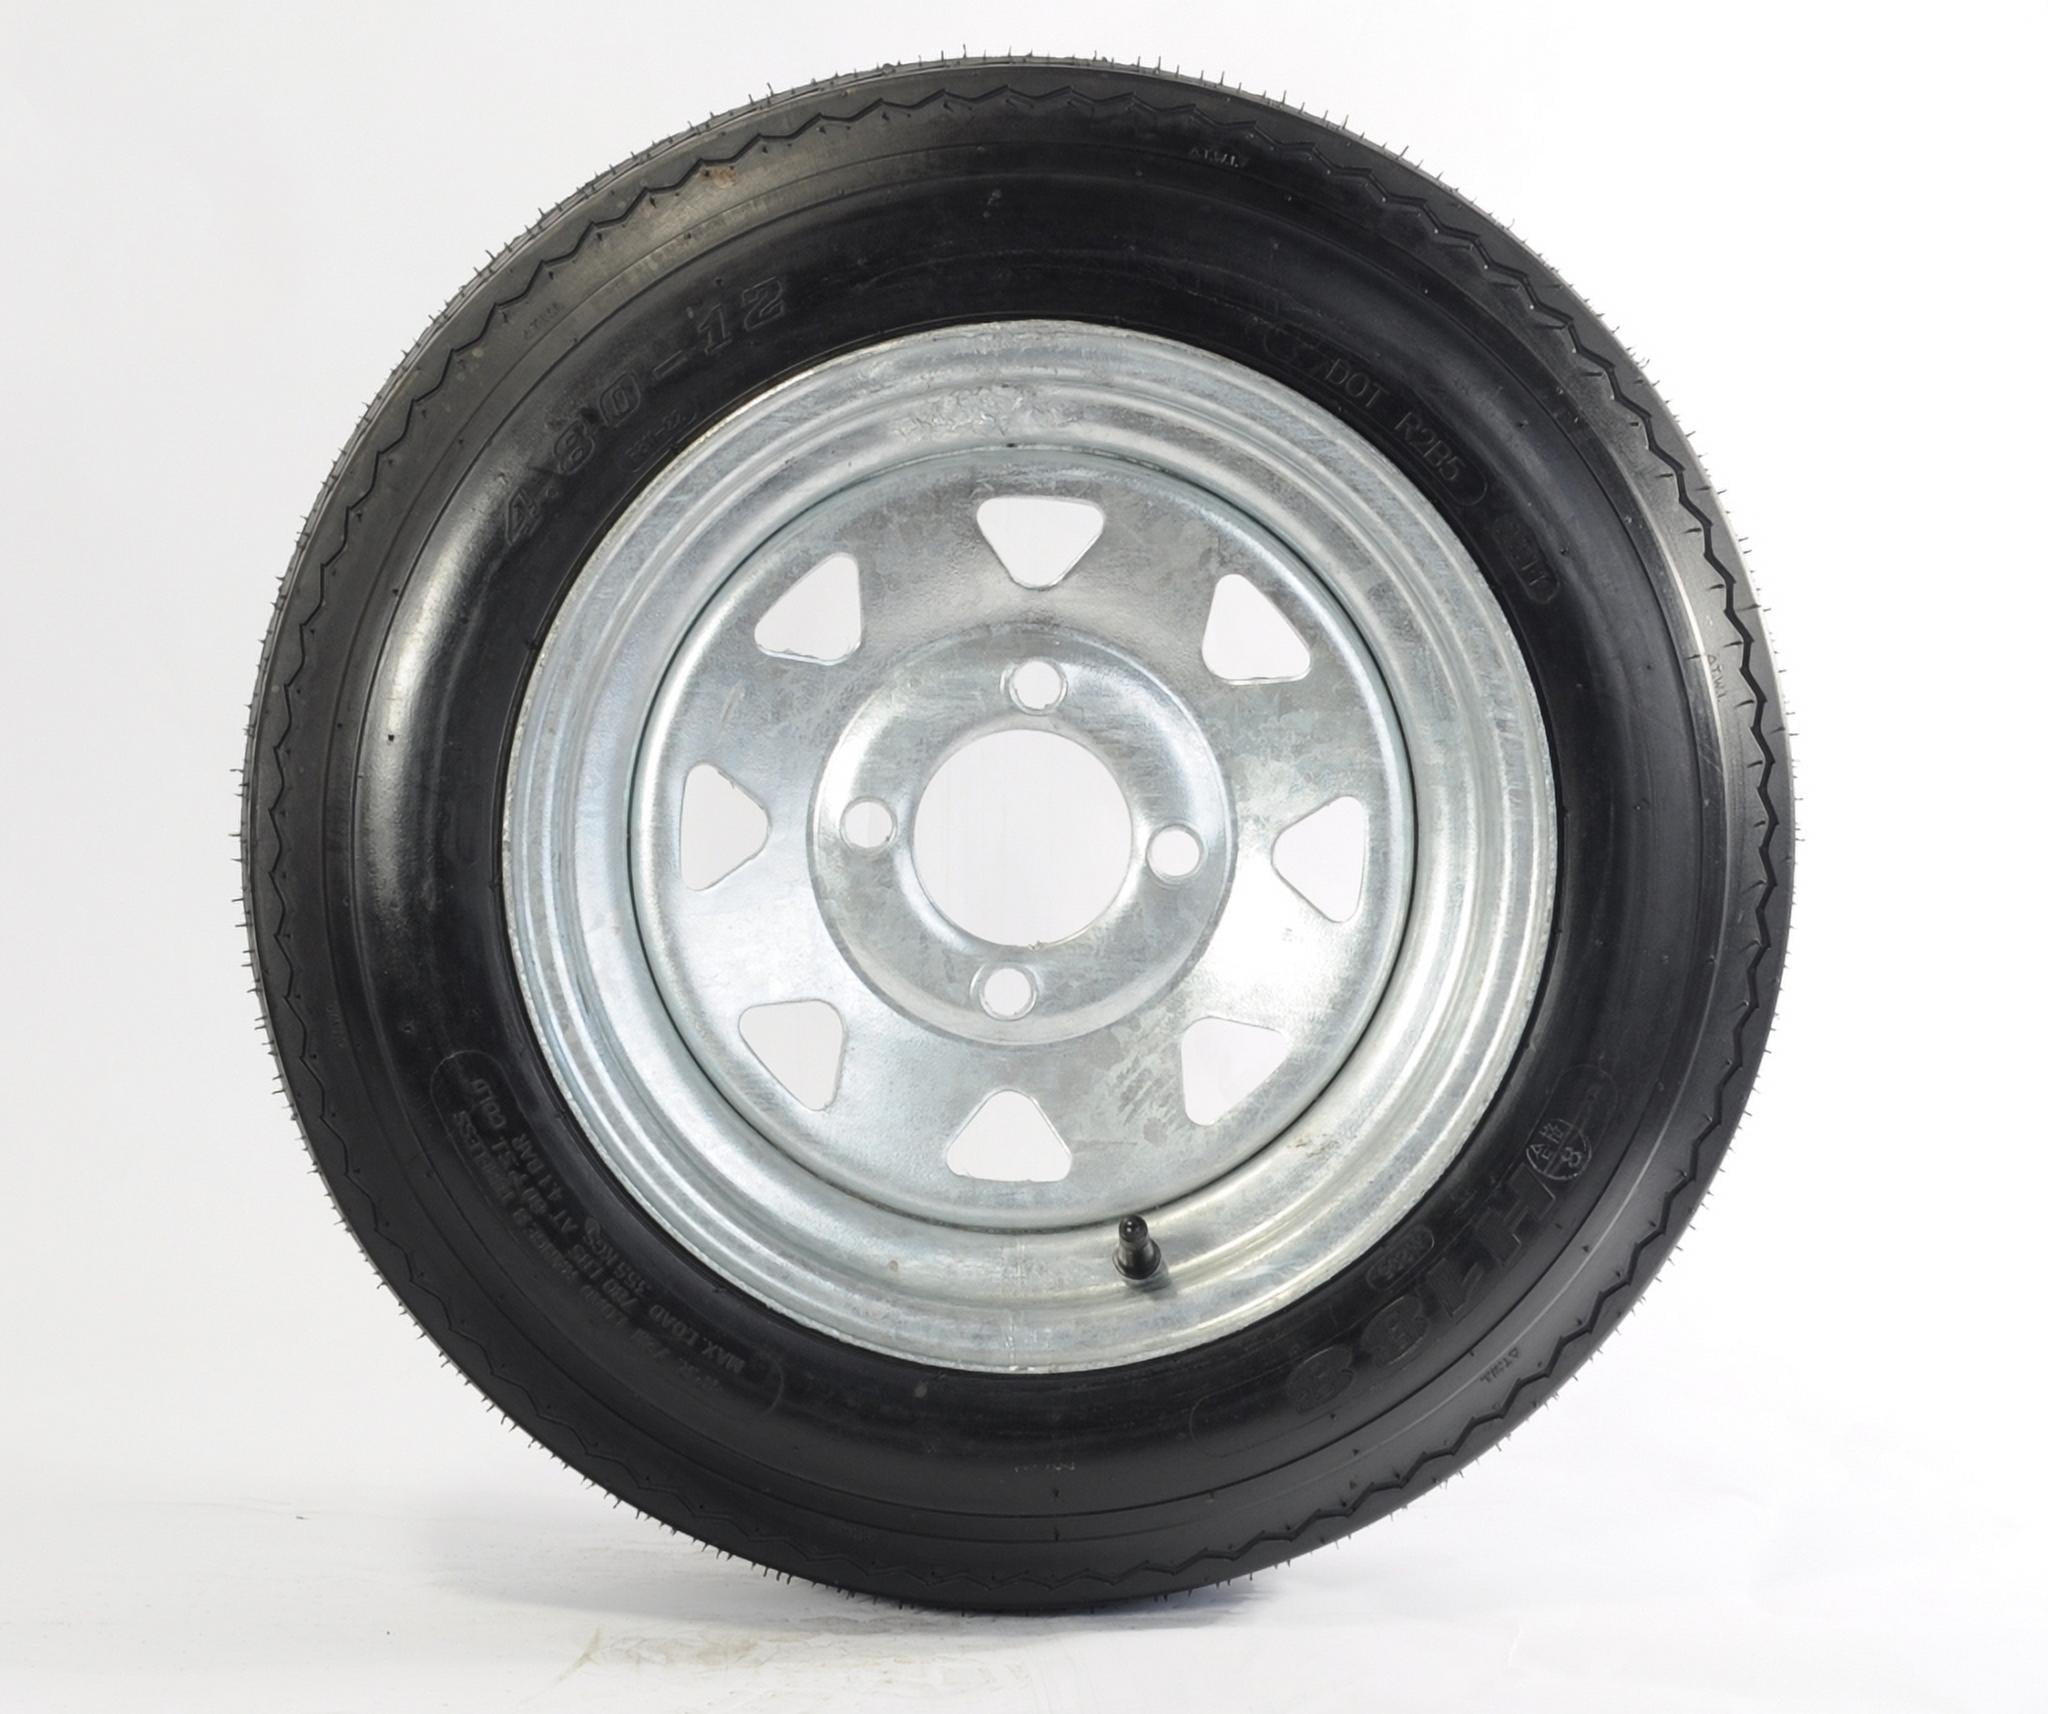 2-Pk Trailer Tire Rim 4.80-12 12 in Load C 4 Lug Galvanized Spoke Wheel 